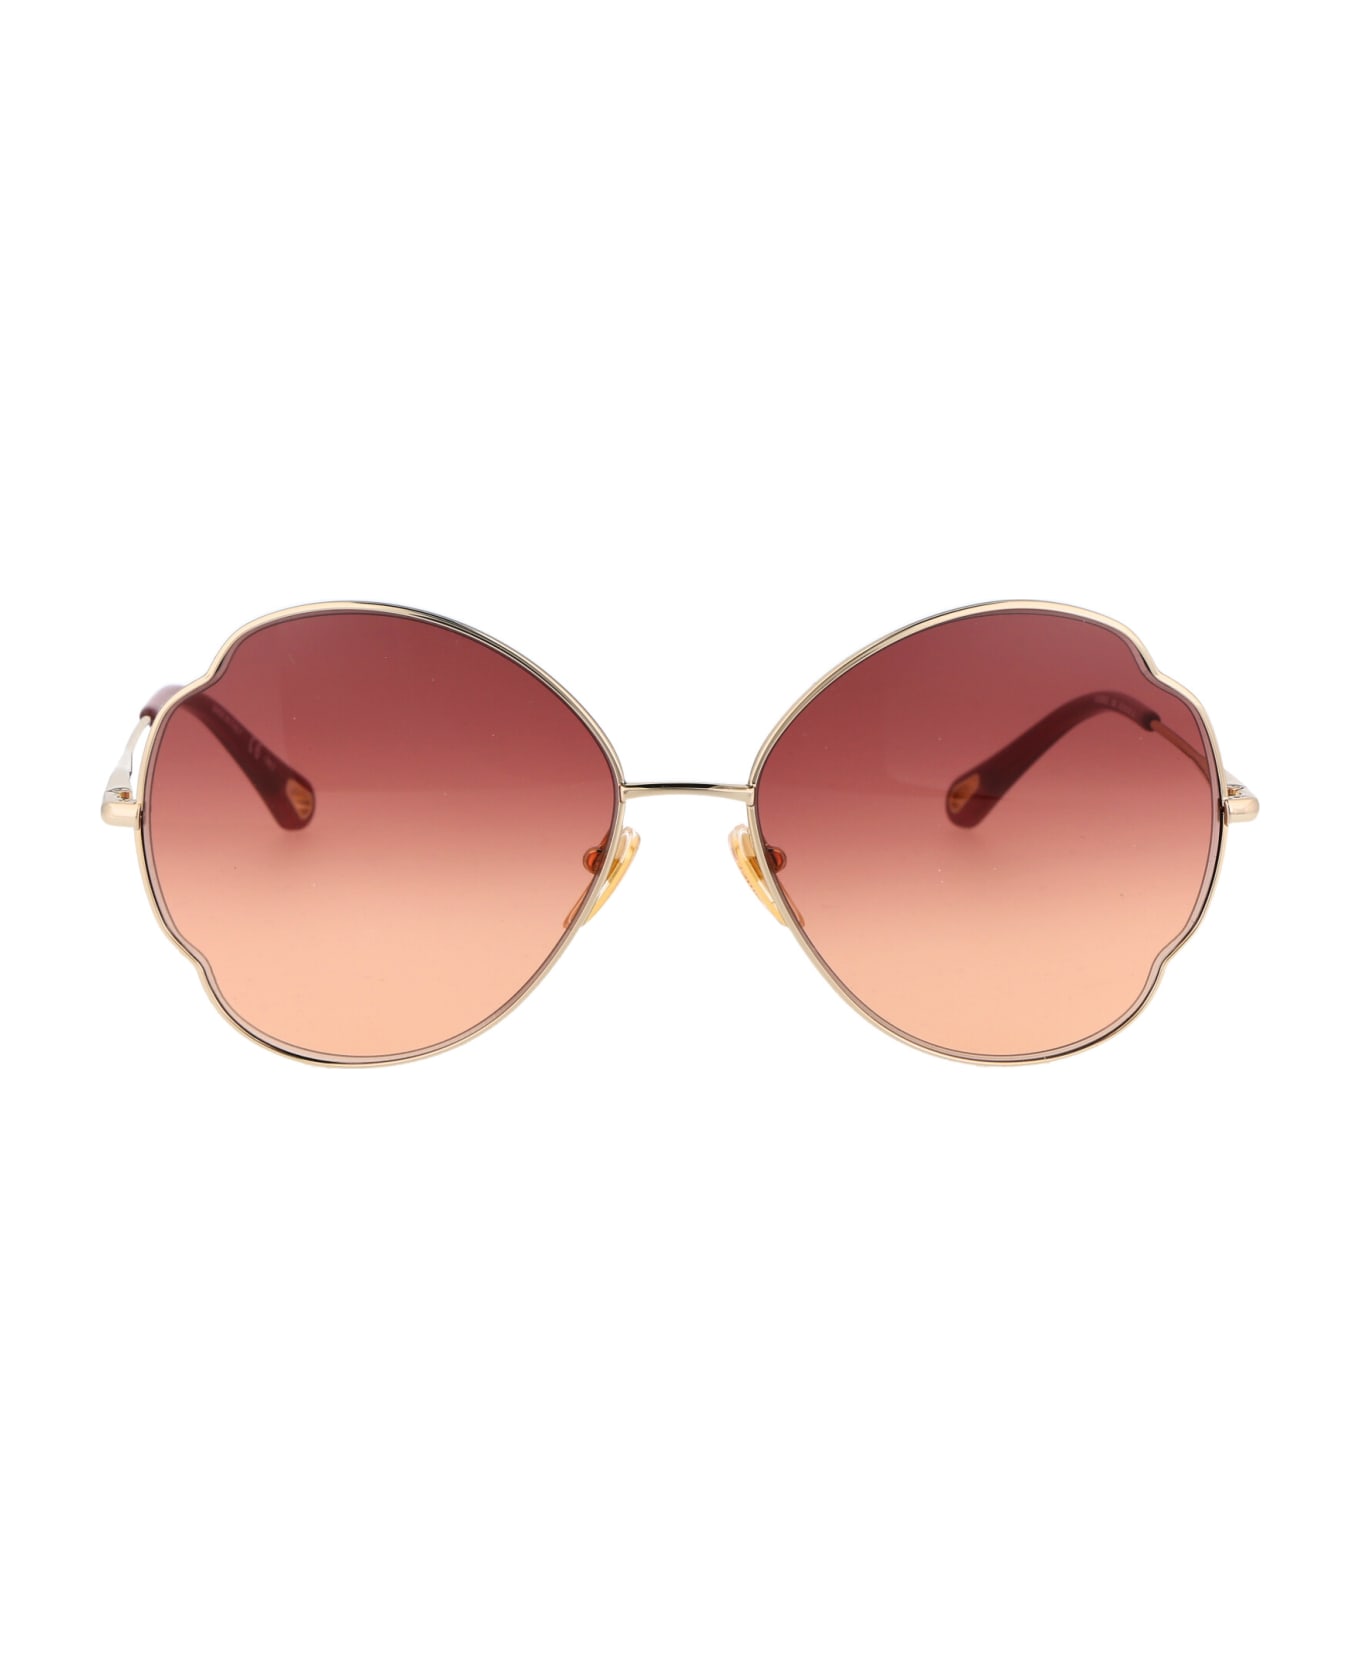 Chloé Eyewear Ch0093s Sunglasses - 004 GOLD GOLD RED サングラス